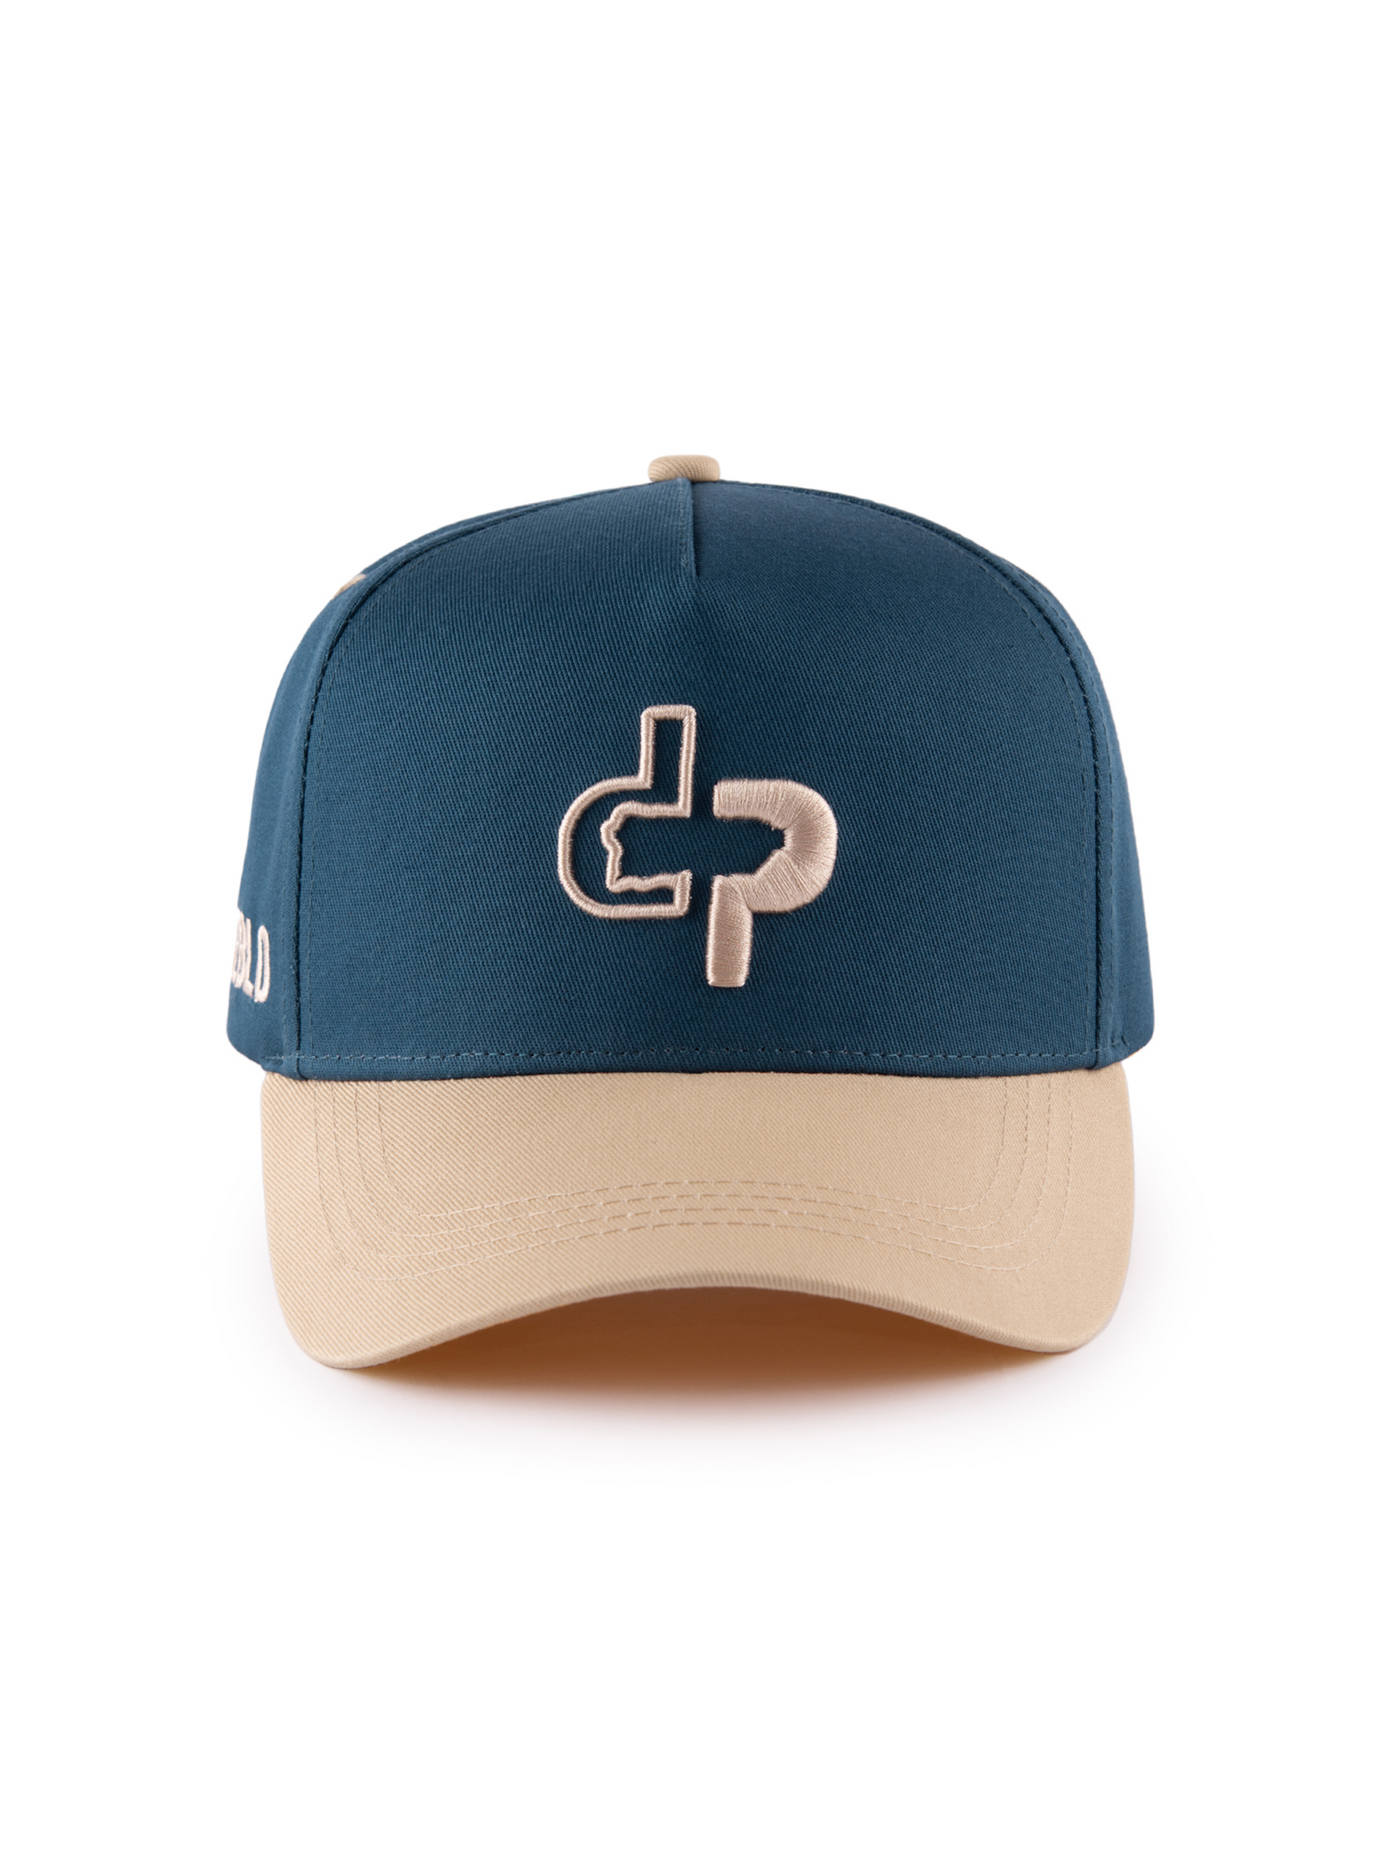 DP ICON - Baseball Cap - Blue